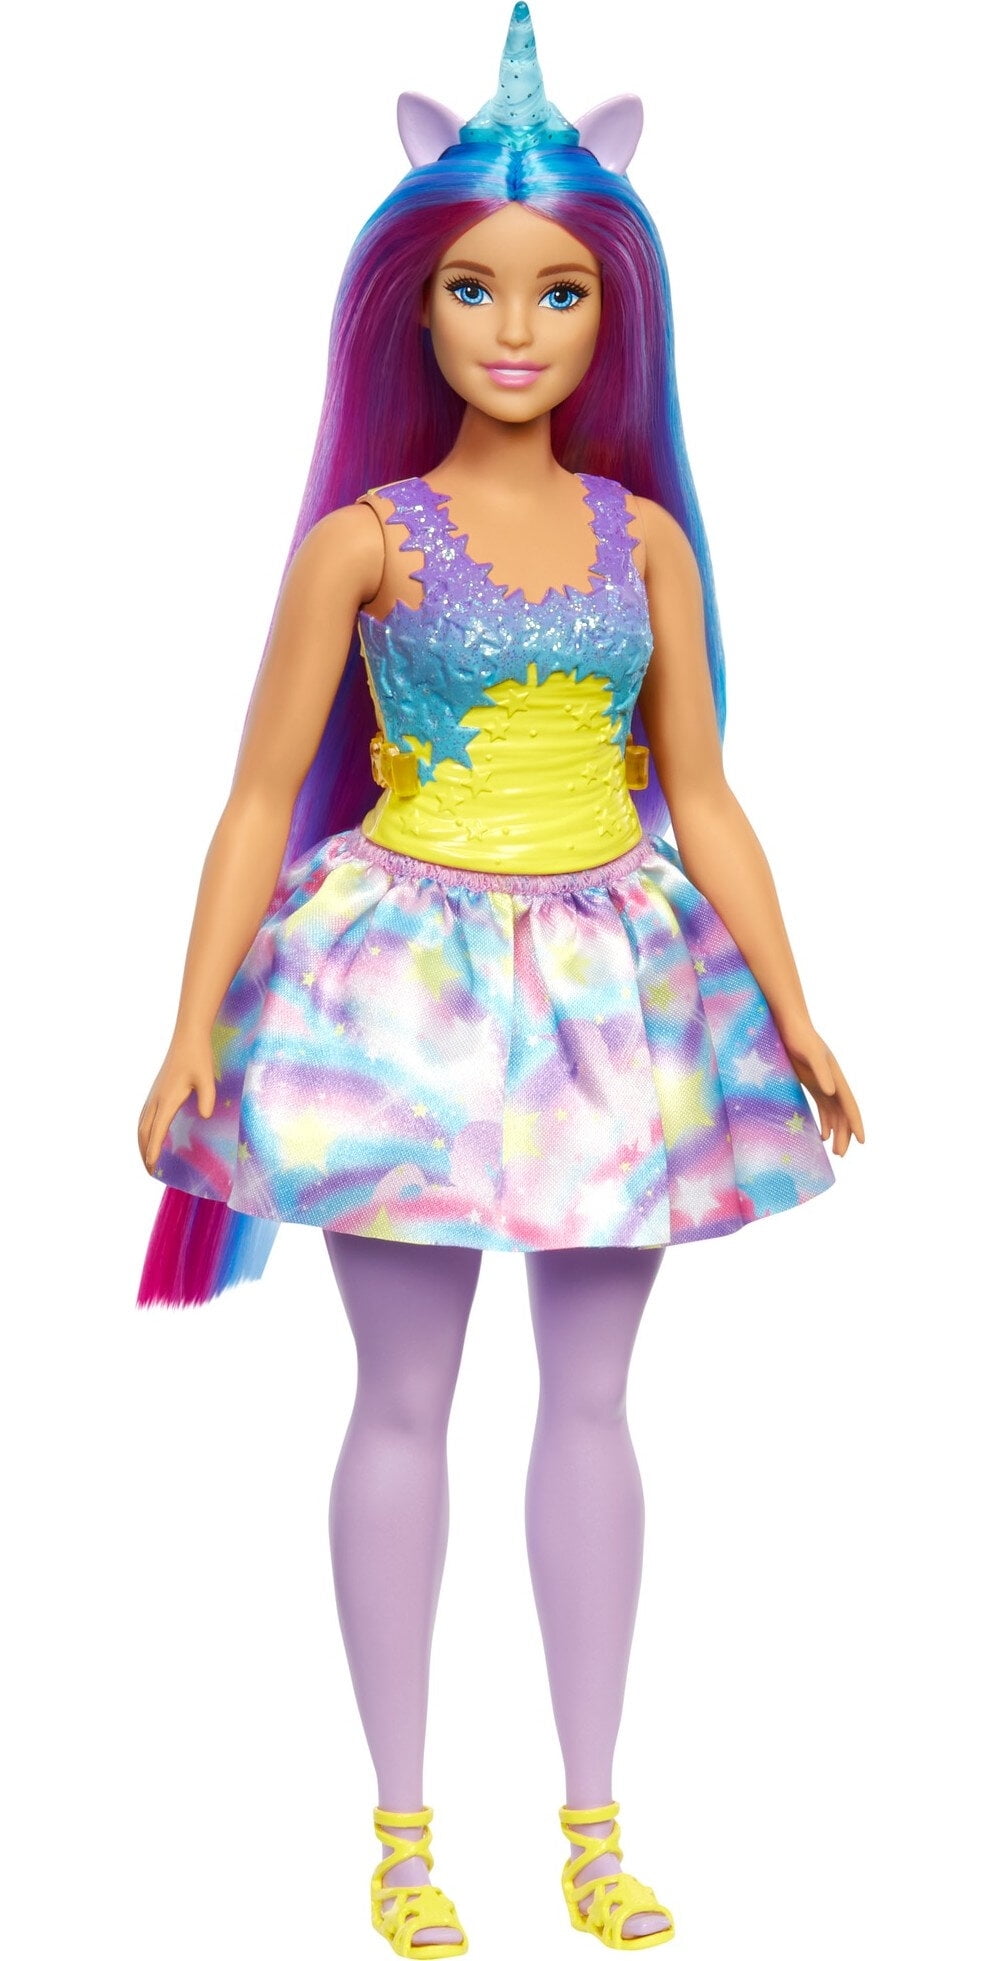 Barbie Unicorn Doll with Headband & Tail, Purple Hair & Rainbow Skirt -